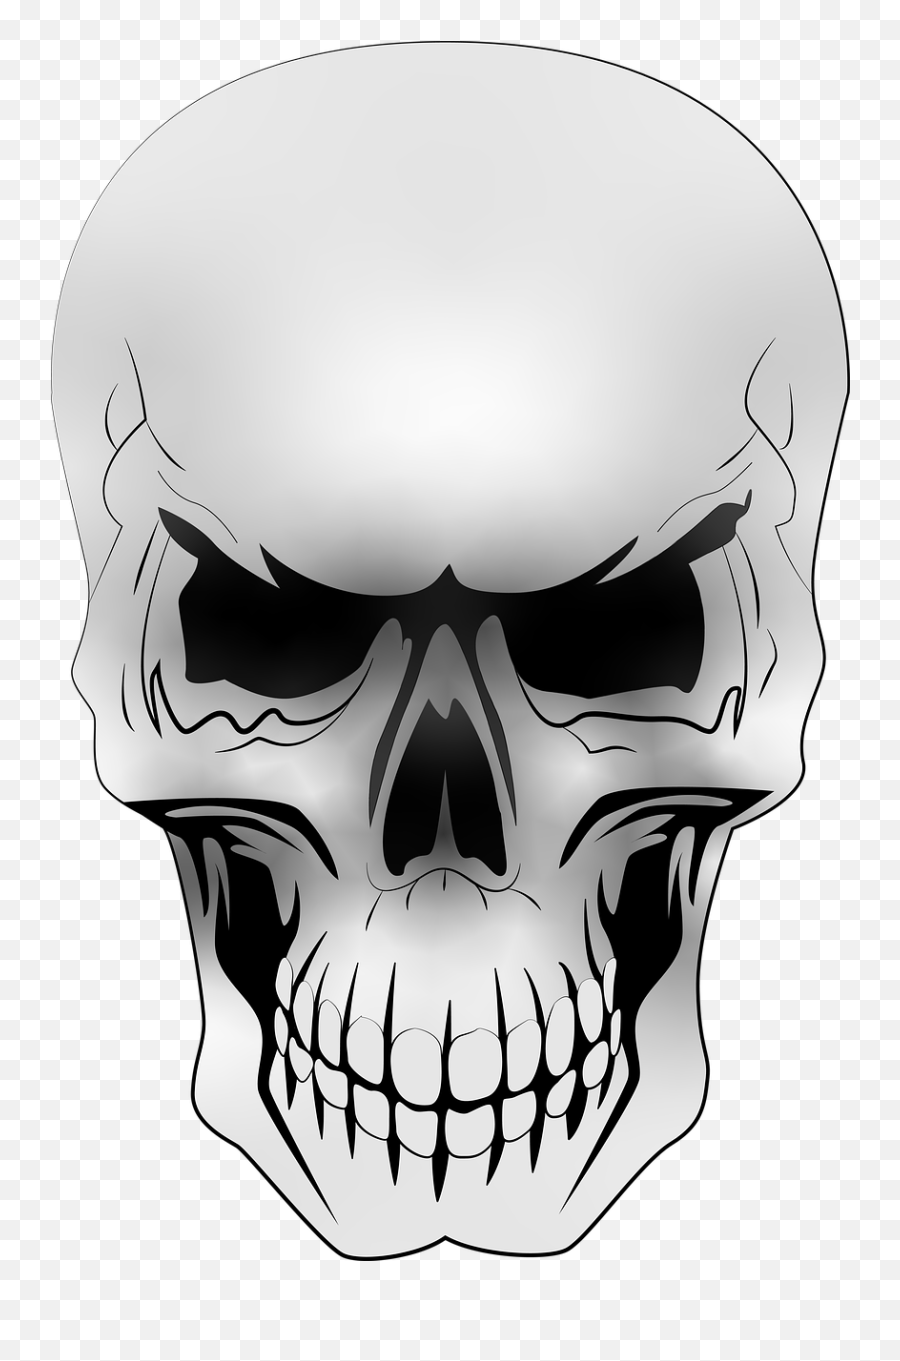 Skull And Crossbones Draw Creepy - Free Image On Pixabay Creepy Png,Skull Crossbones Png